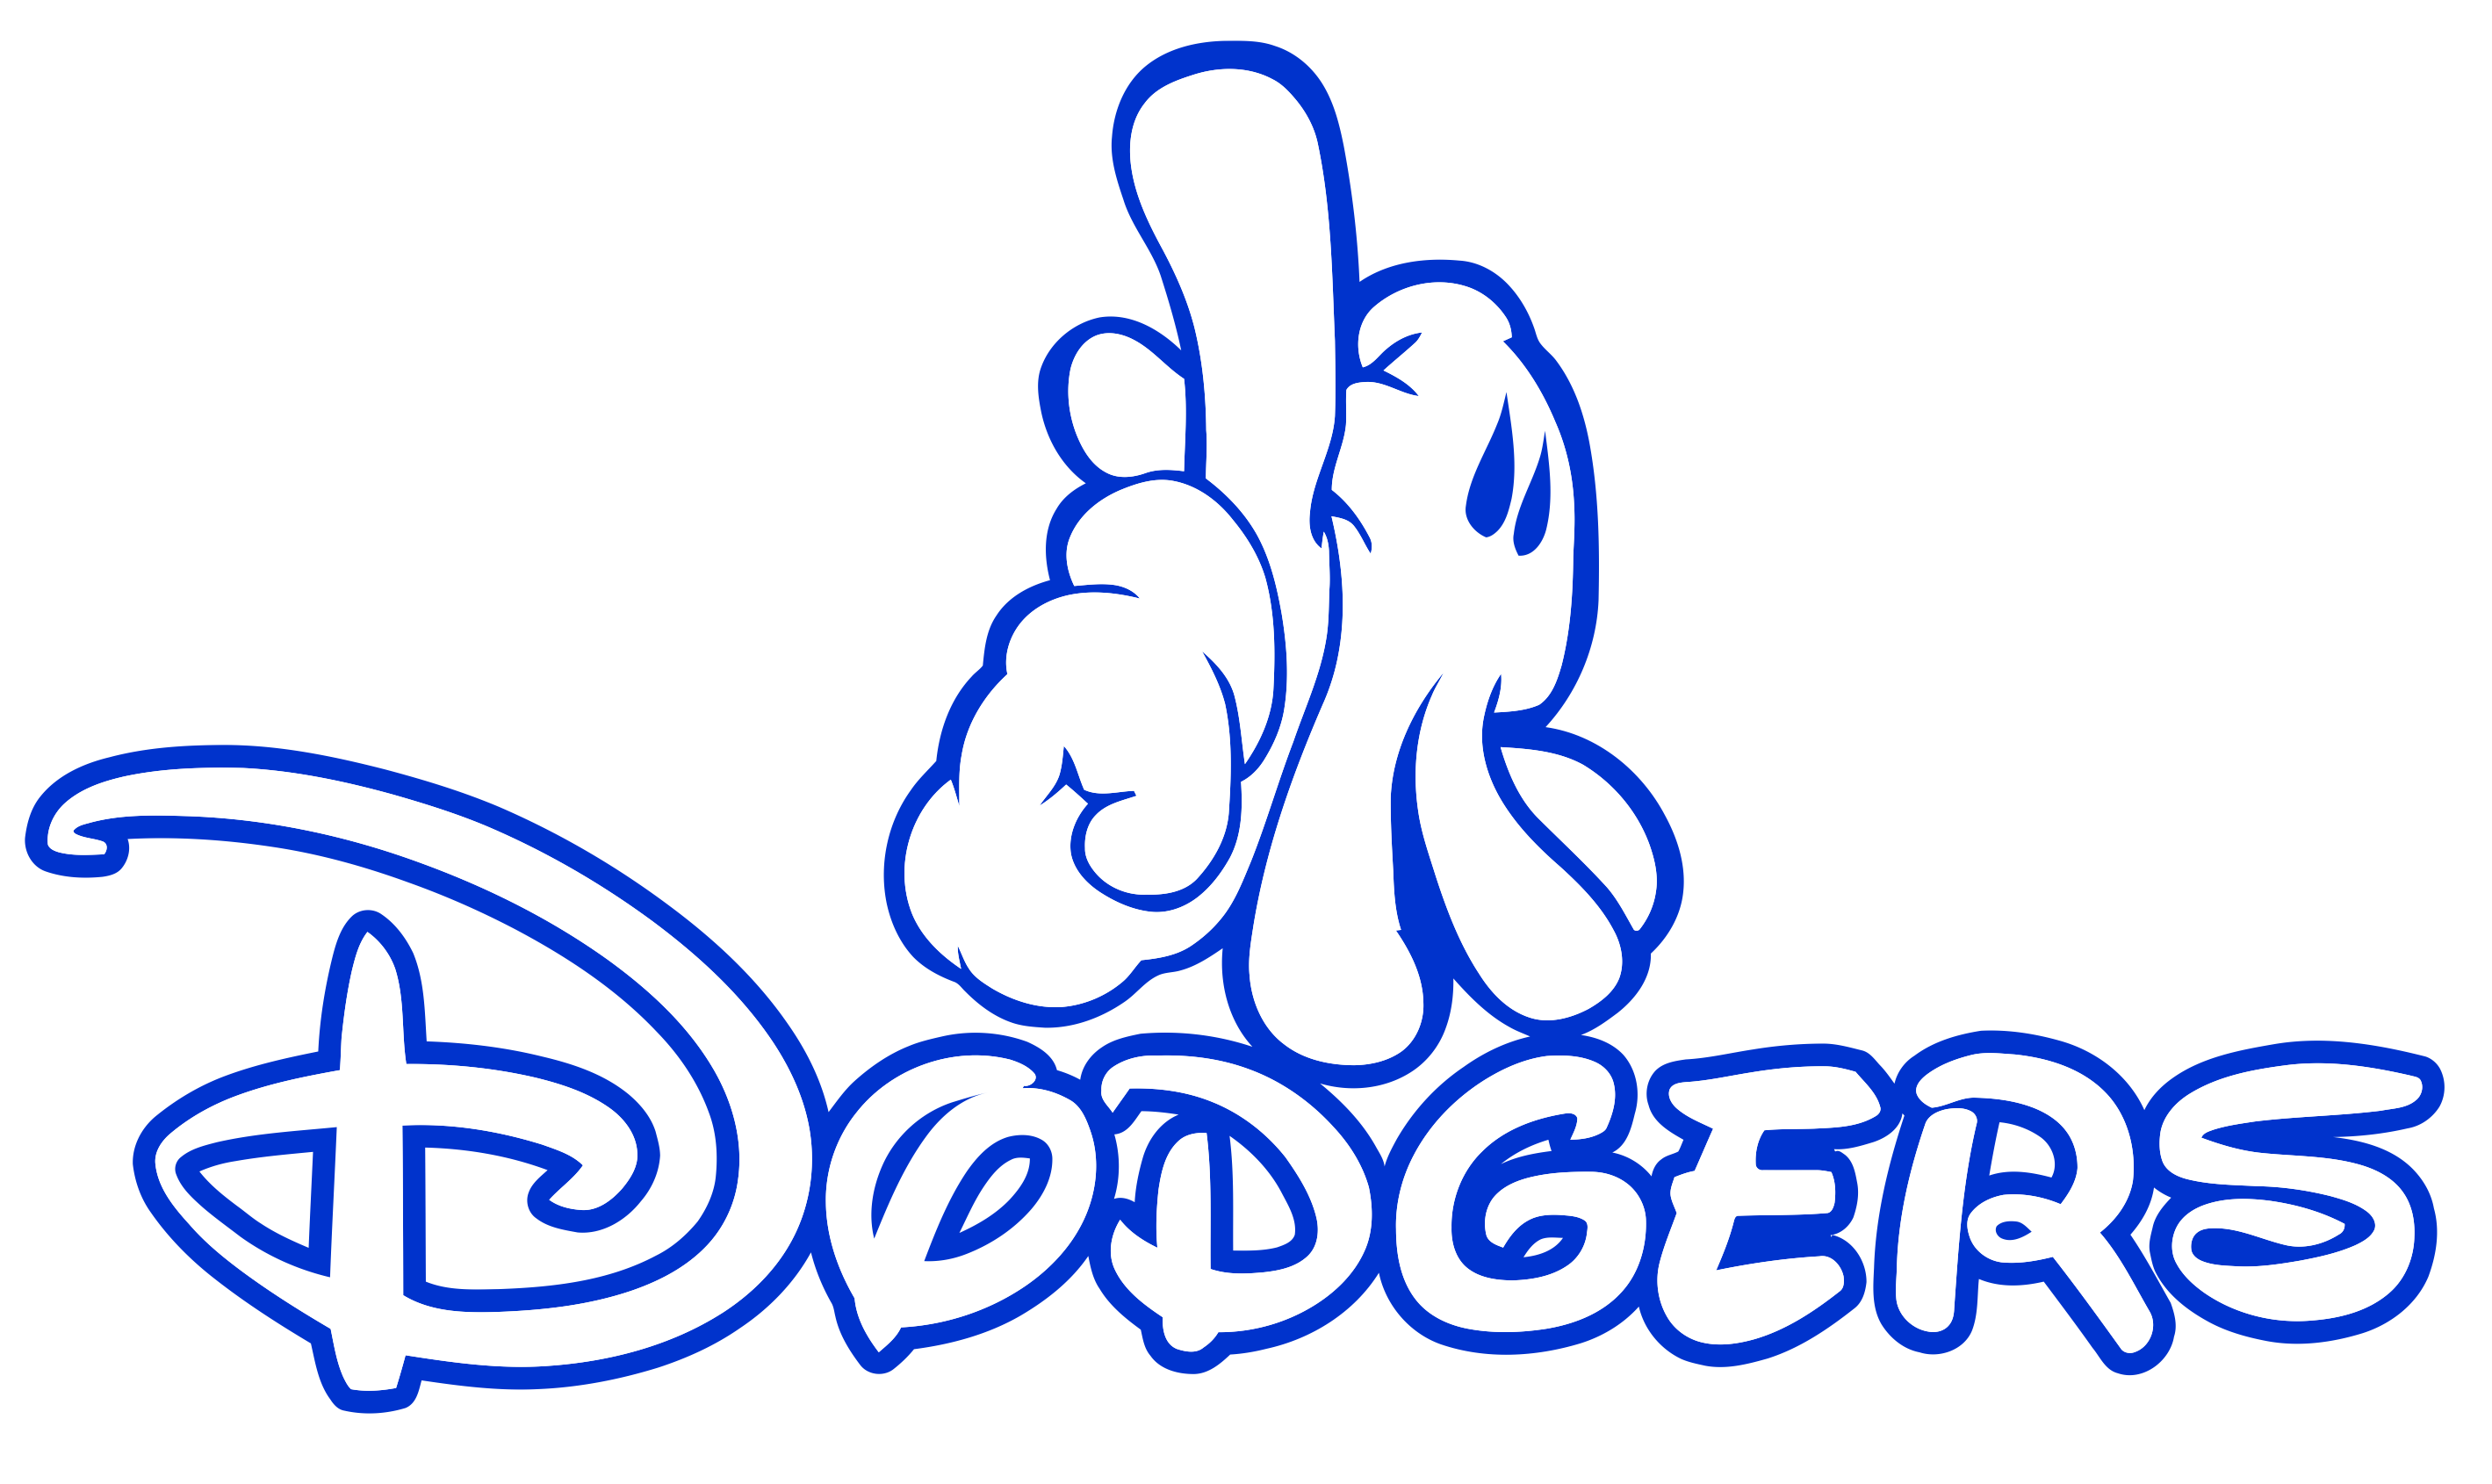 Los Angeles Dodgers Baseball Clip art.